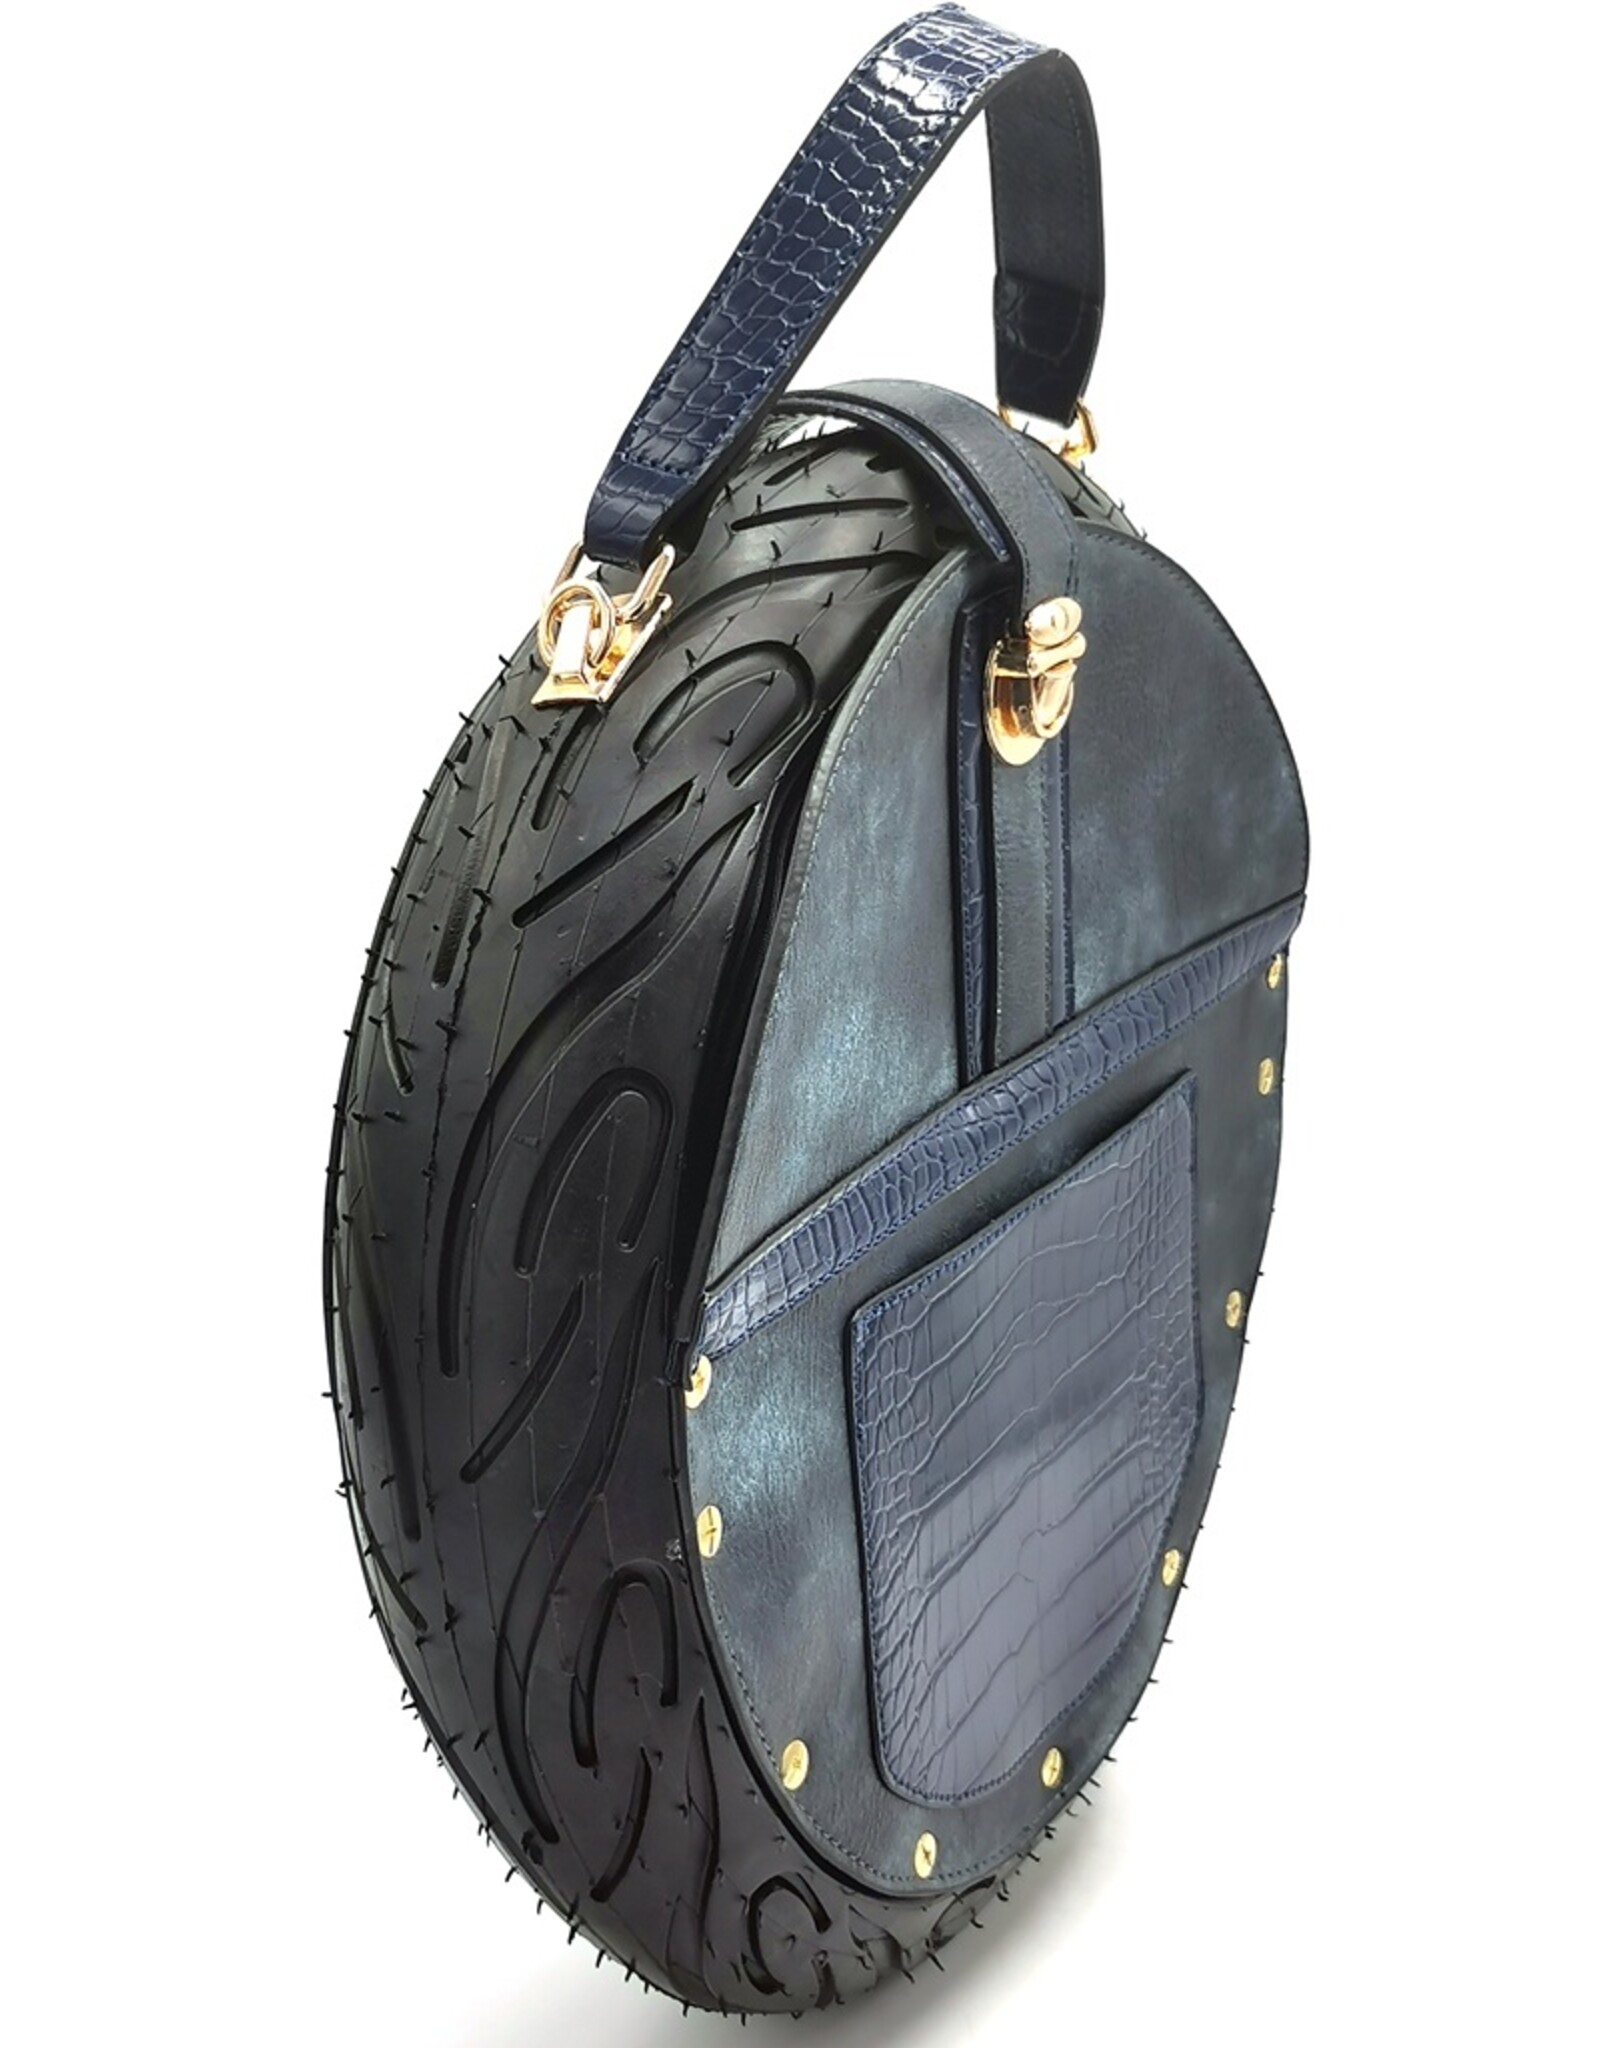 Magic Bags Fantasy bags - Clock bag with Working Clock Raceband Blue (large)